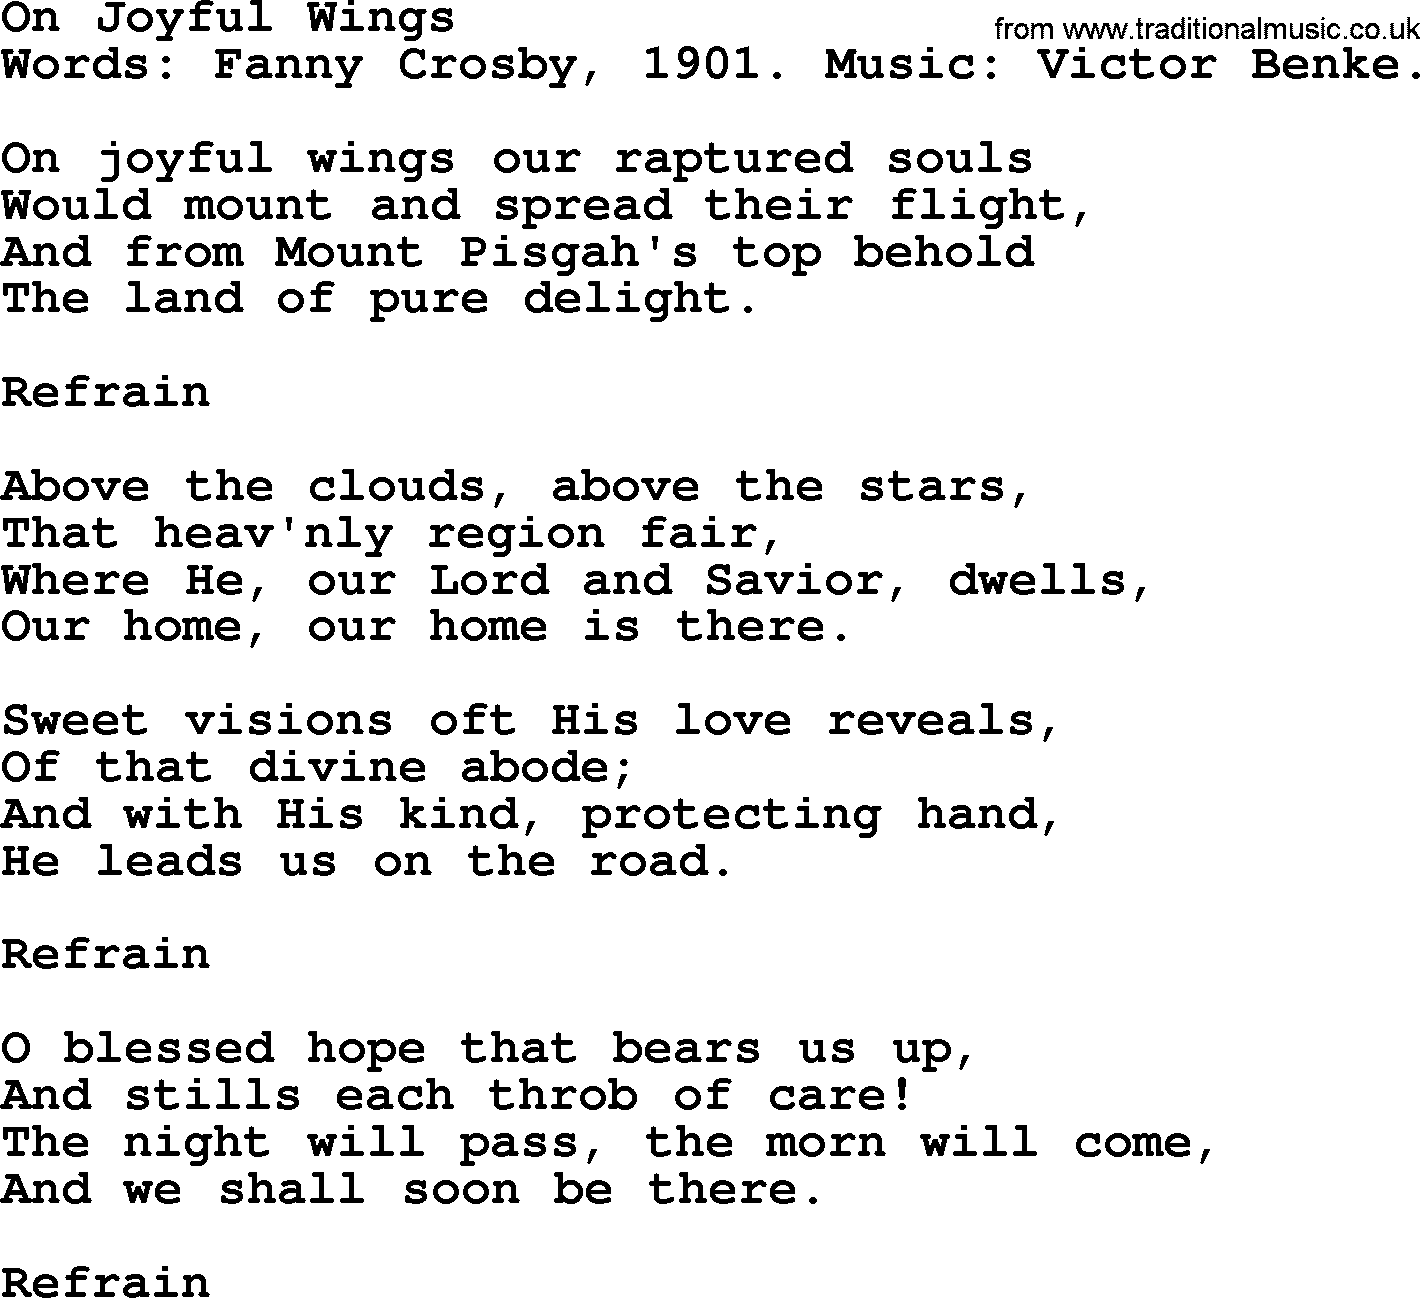 Fanny Crosby song: On Joyful Wings, lyrics